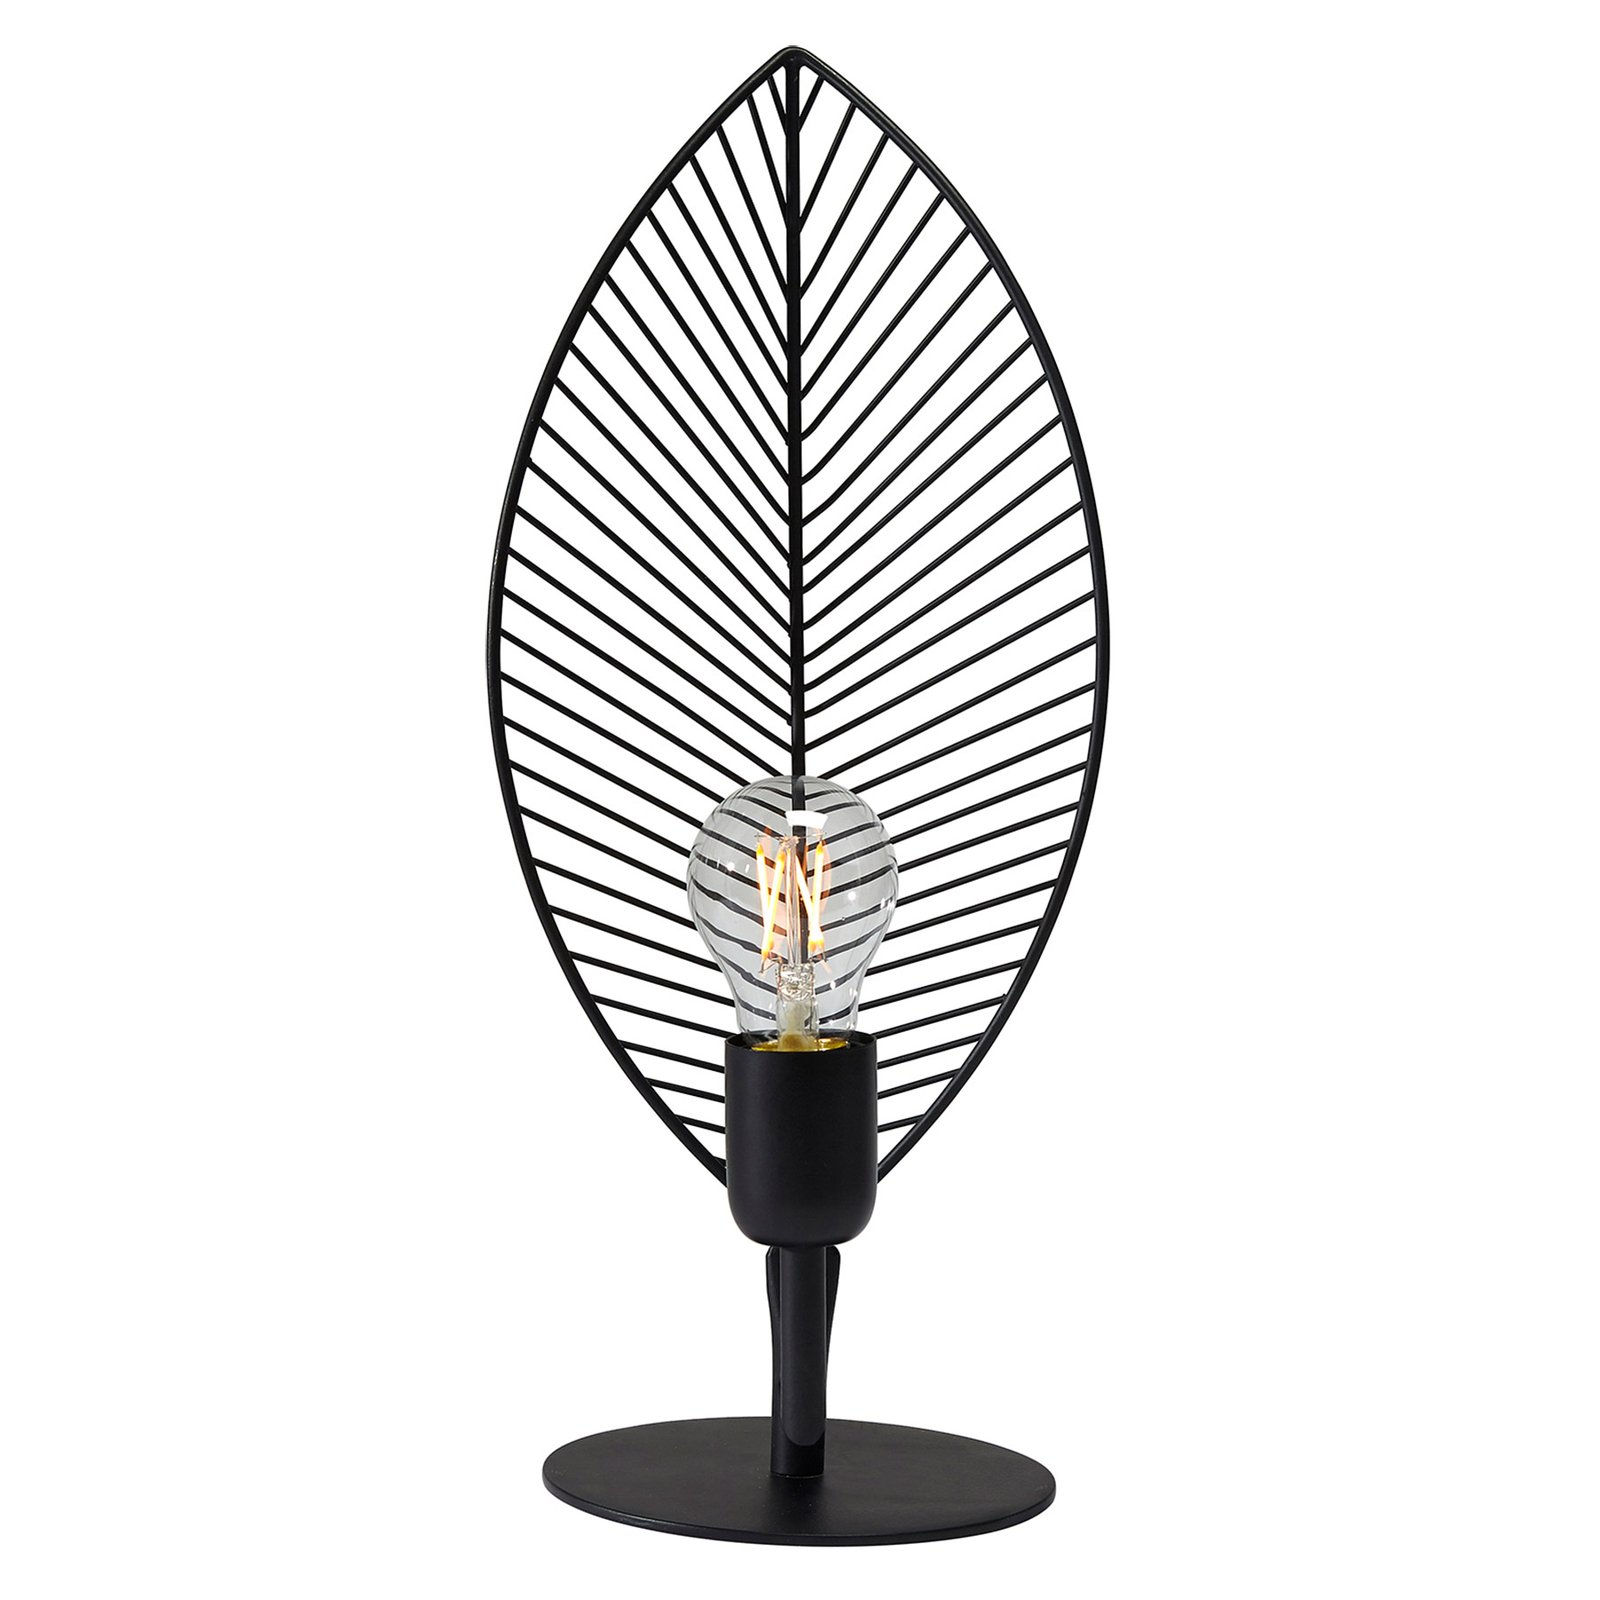 PR Home Elm table lamp in leaf shape, height 42 cm